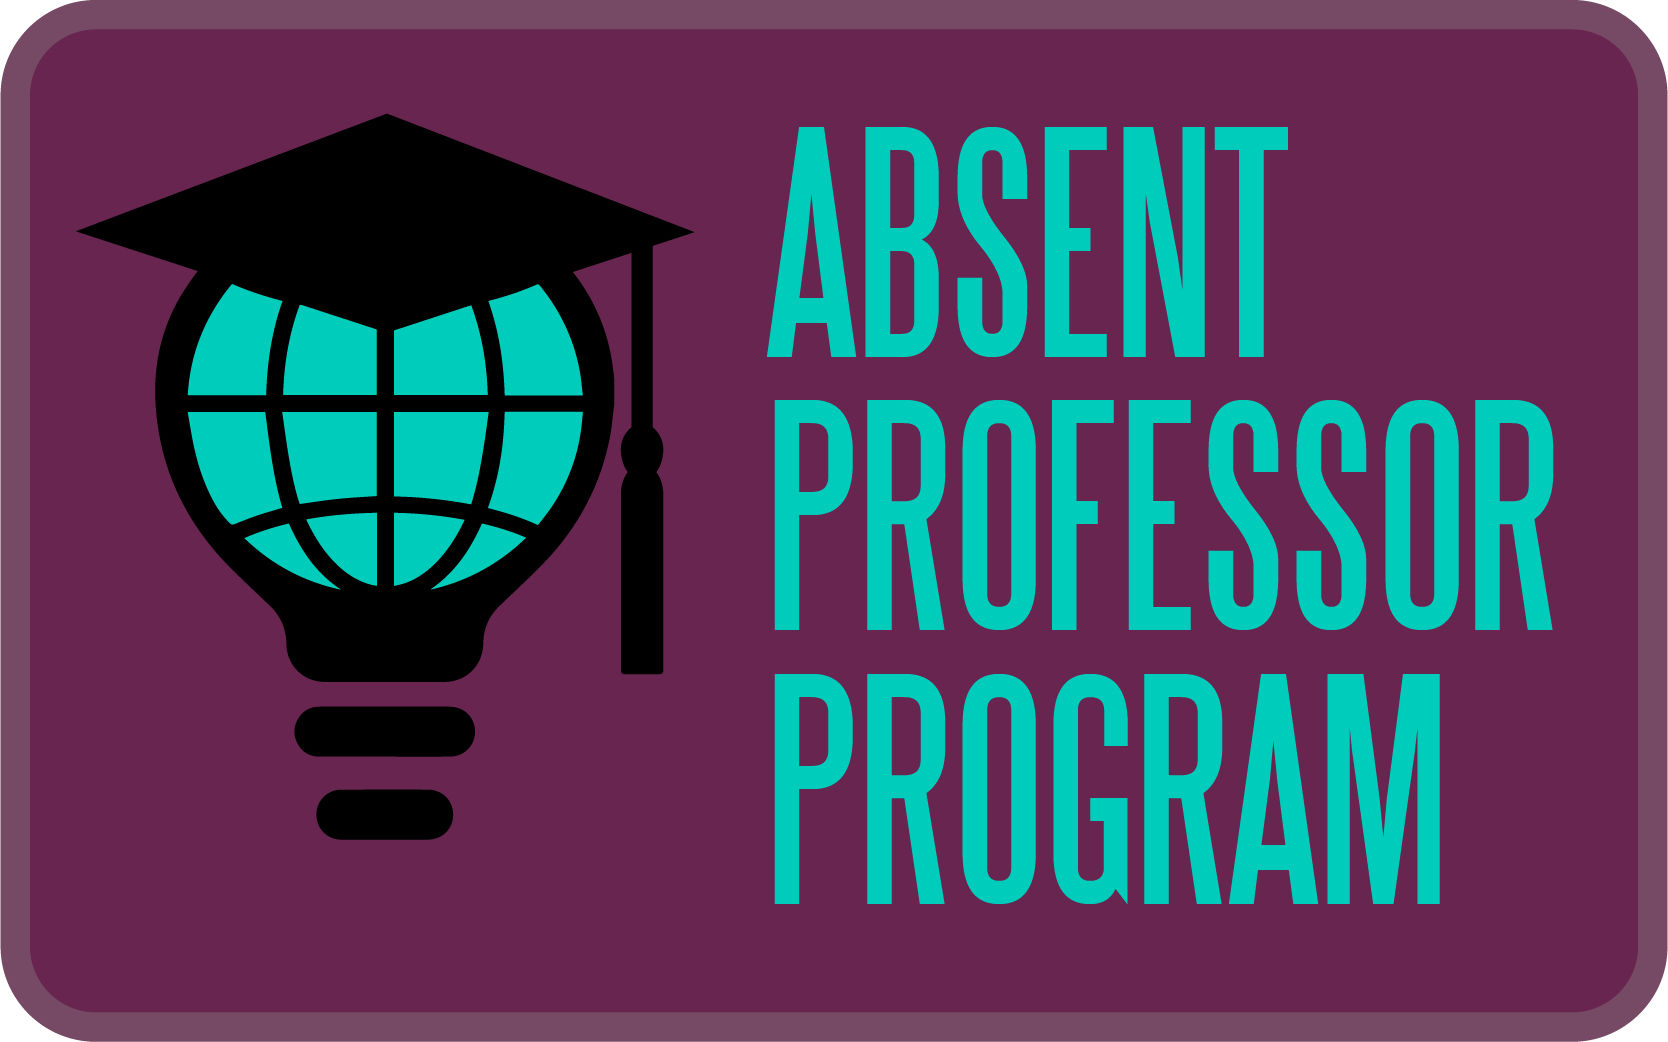 Absent Professor Program